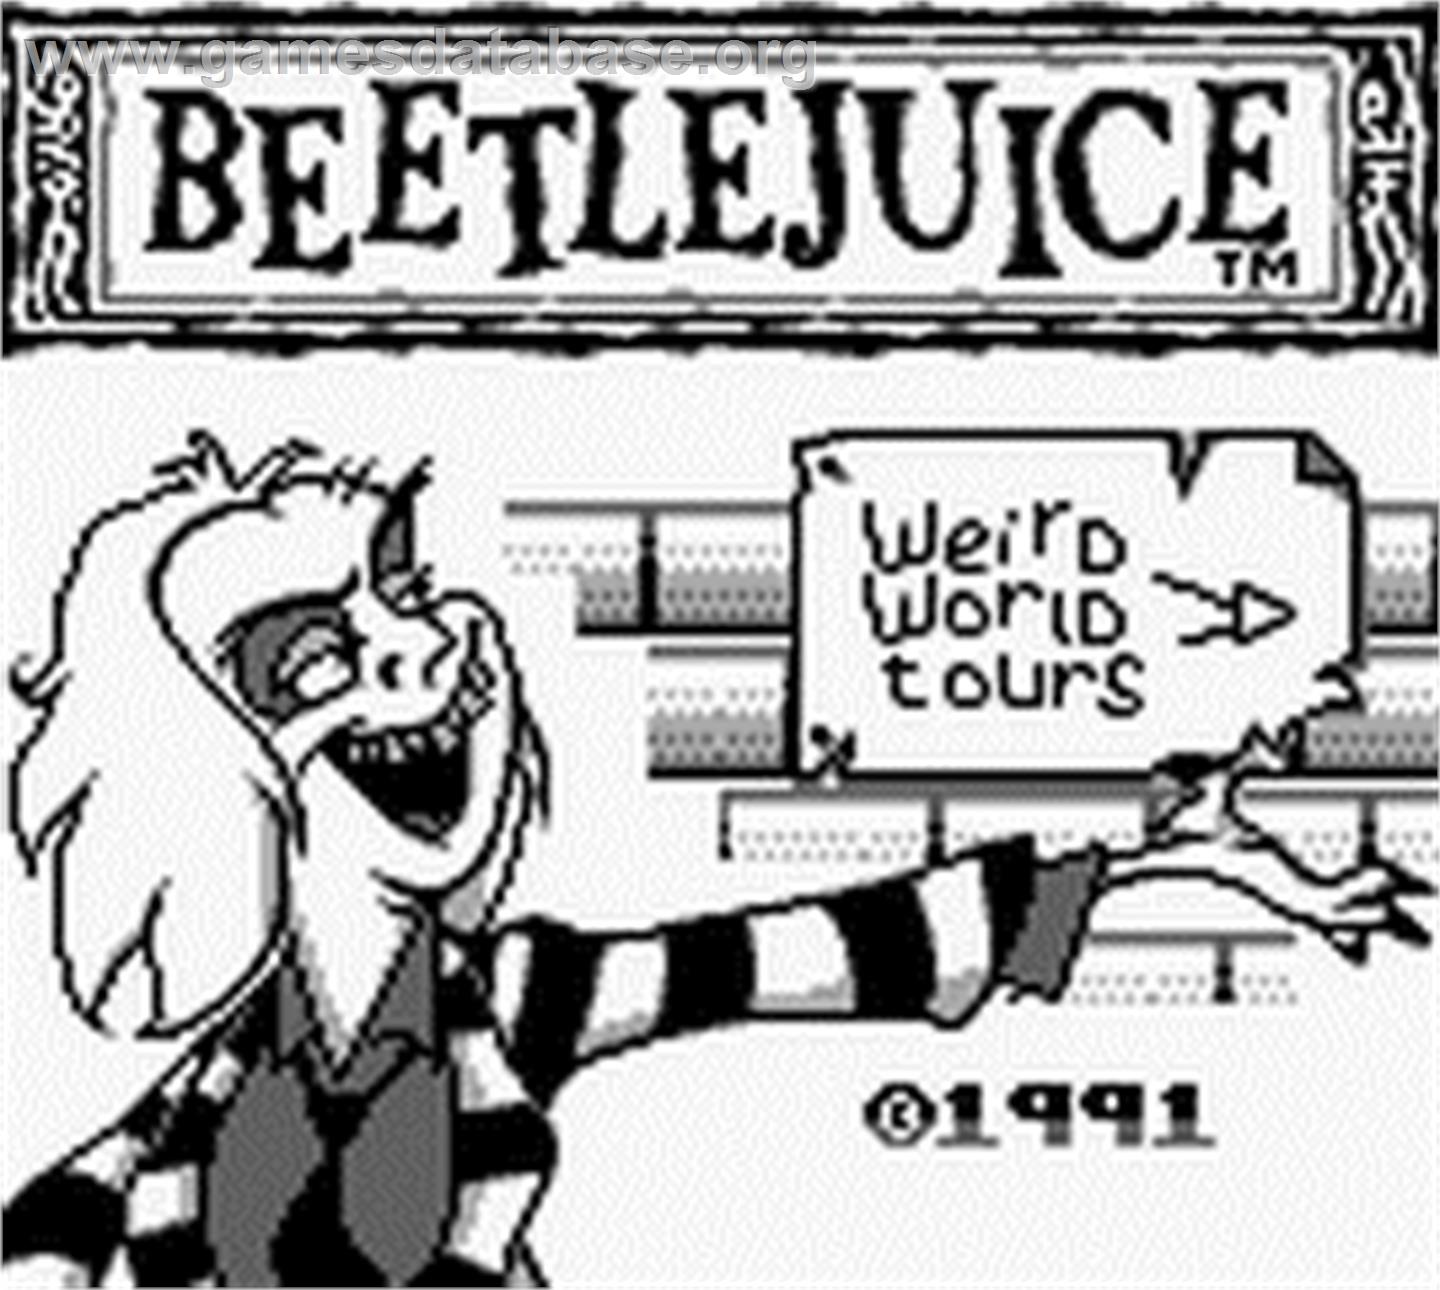 Beetlejuice - Nintendo Game Boy - Artwork - Title Screen